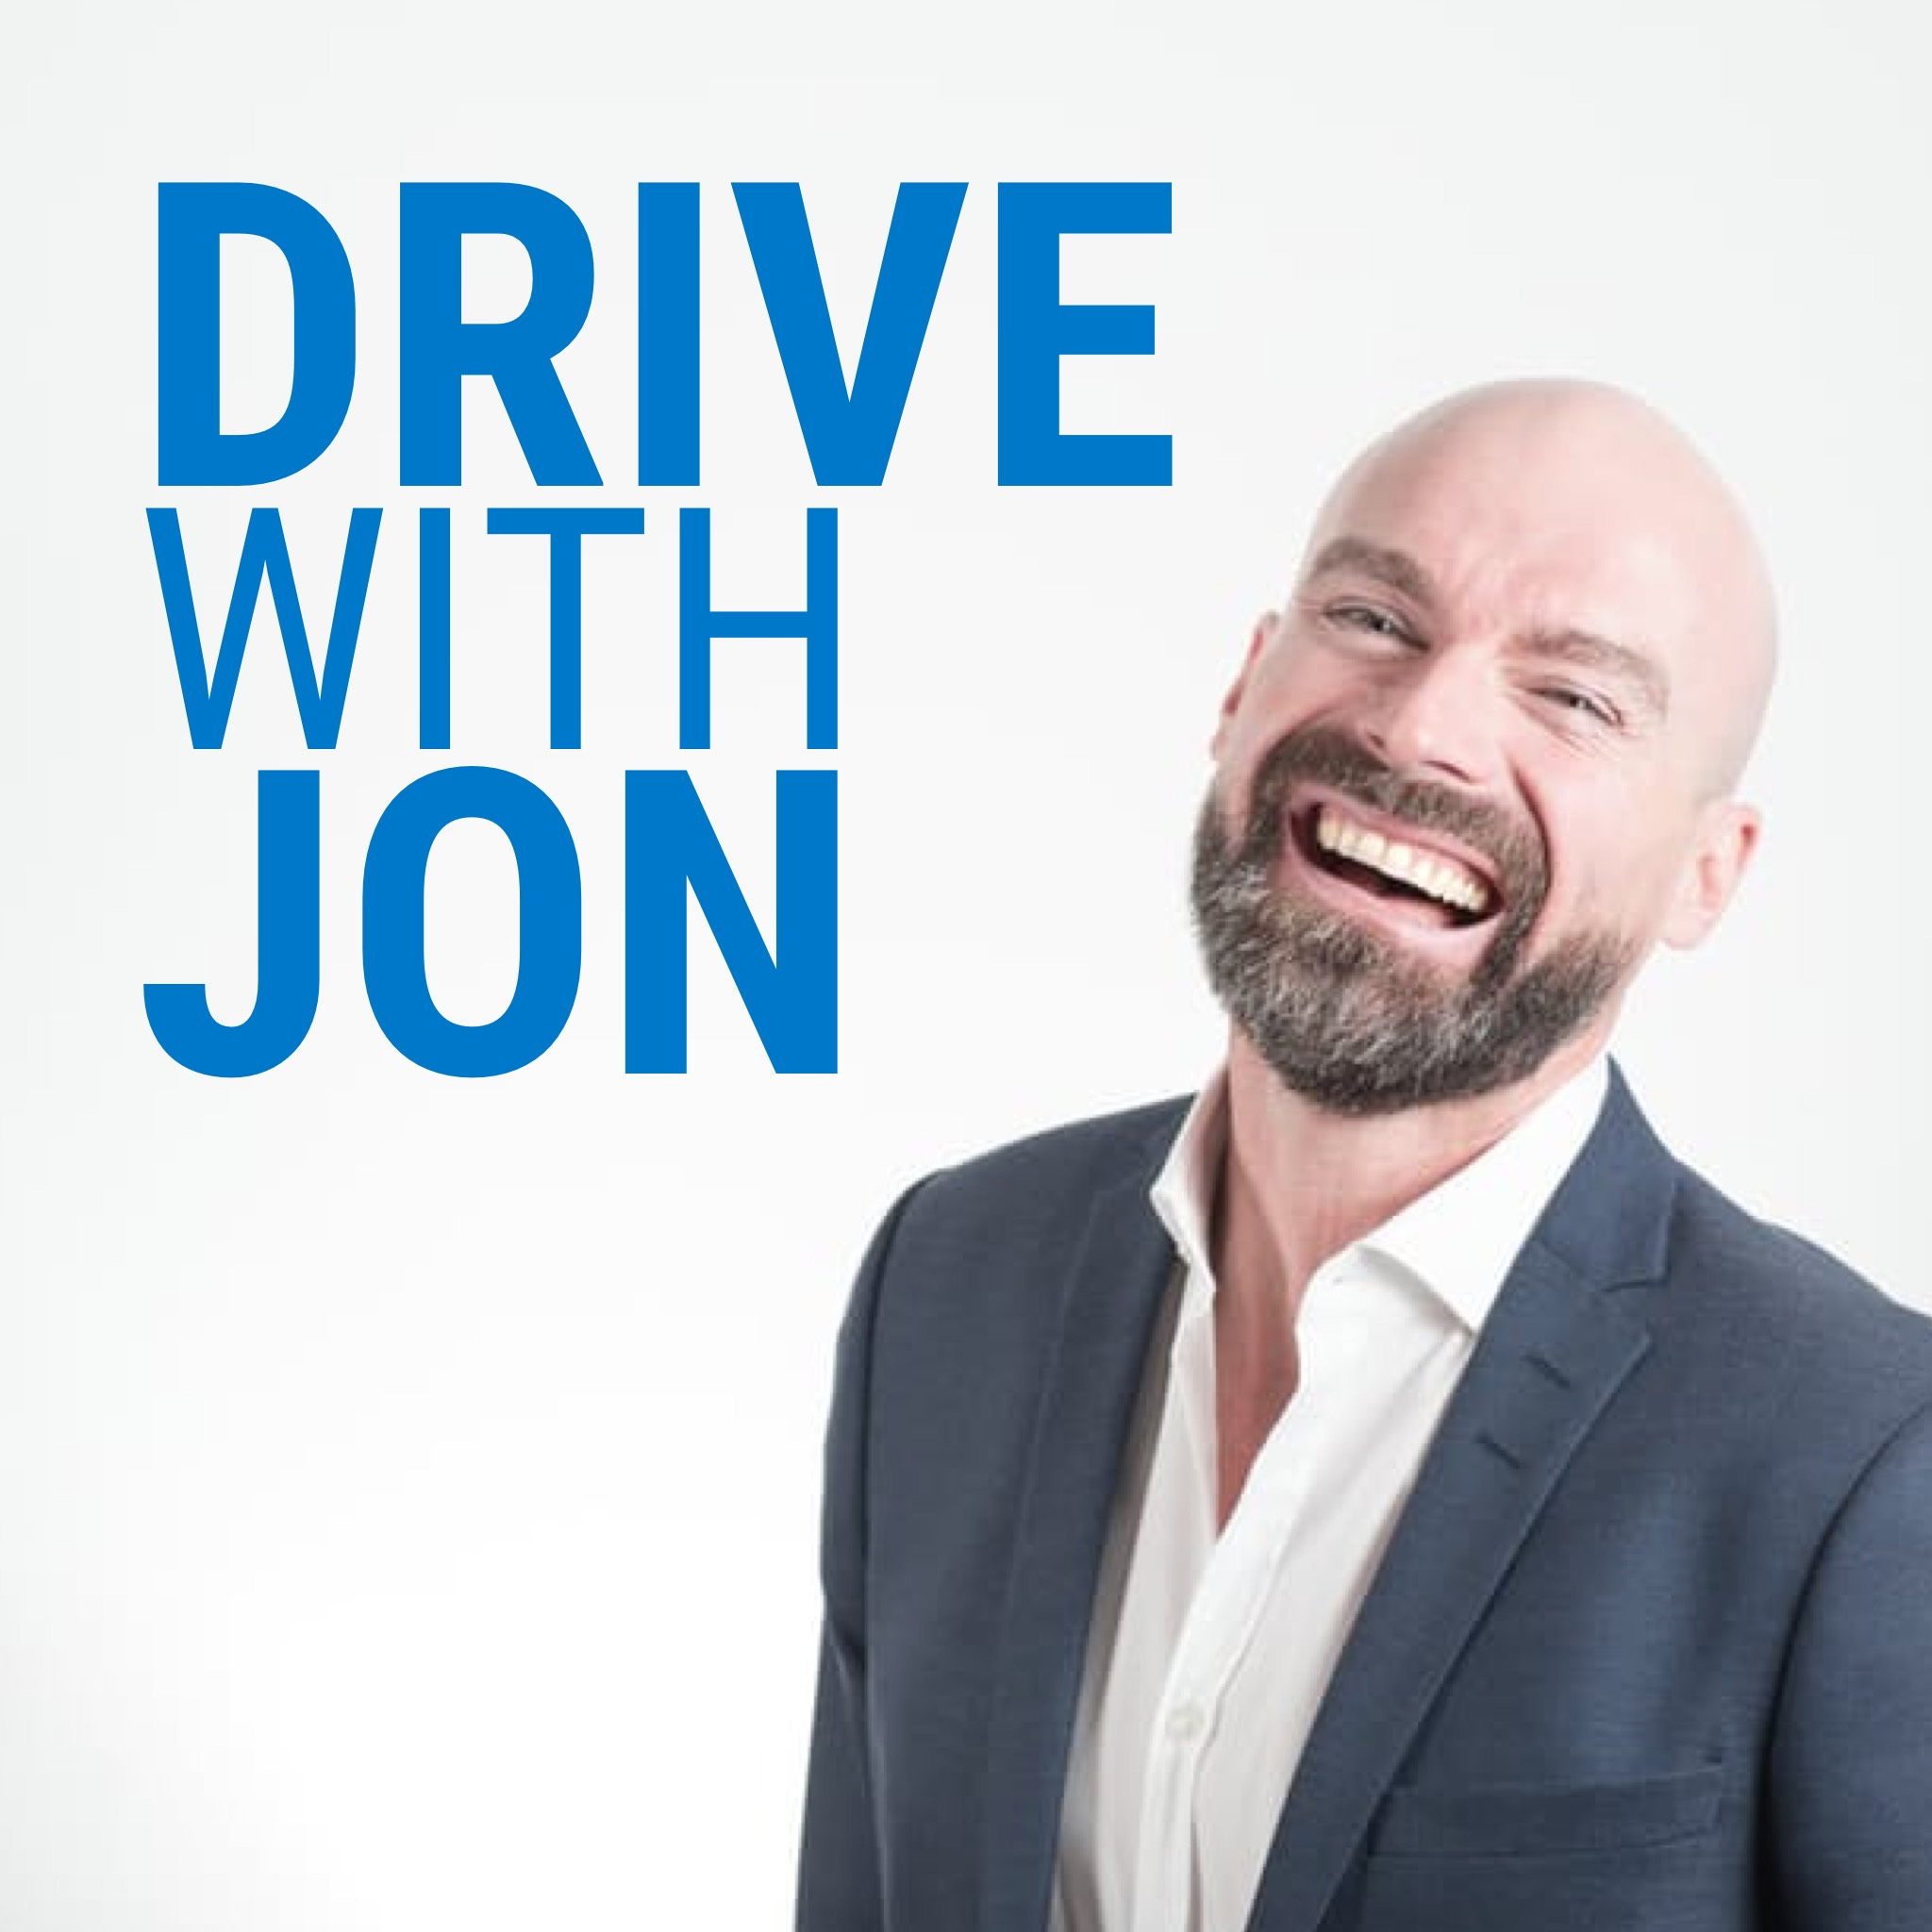 12:16 pm - Drive with Jon